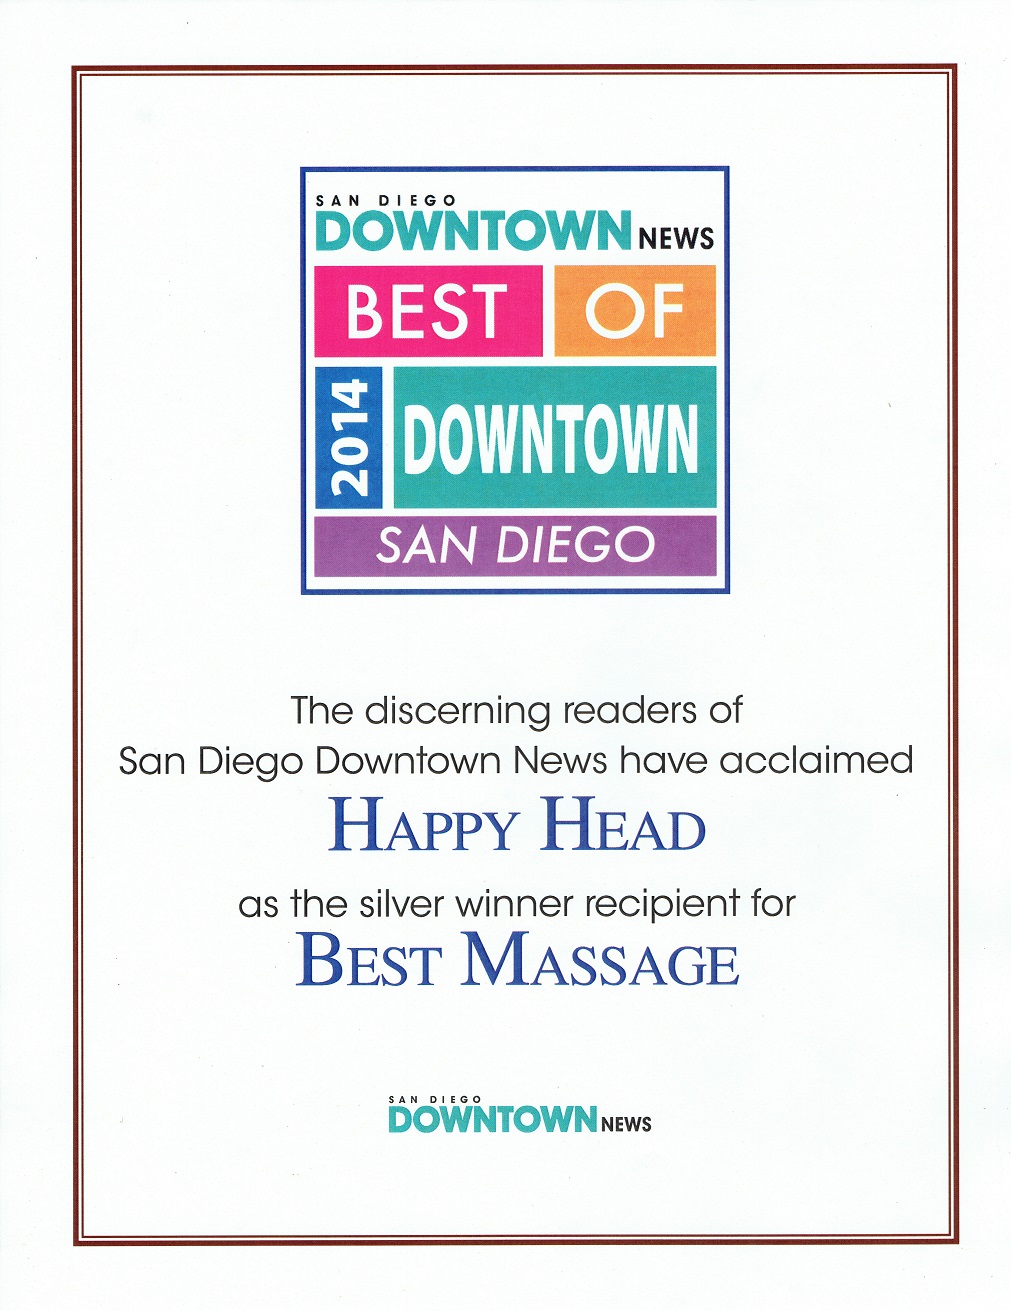 Happy Head Massage In San Diego Launches New Loyalty Rewards Program